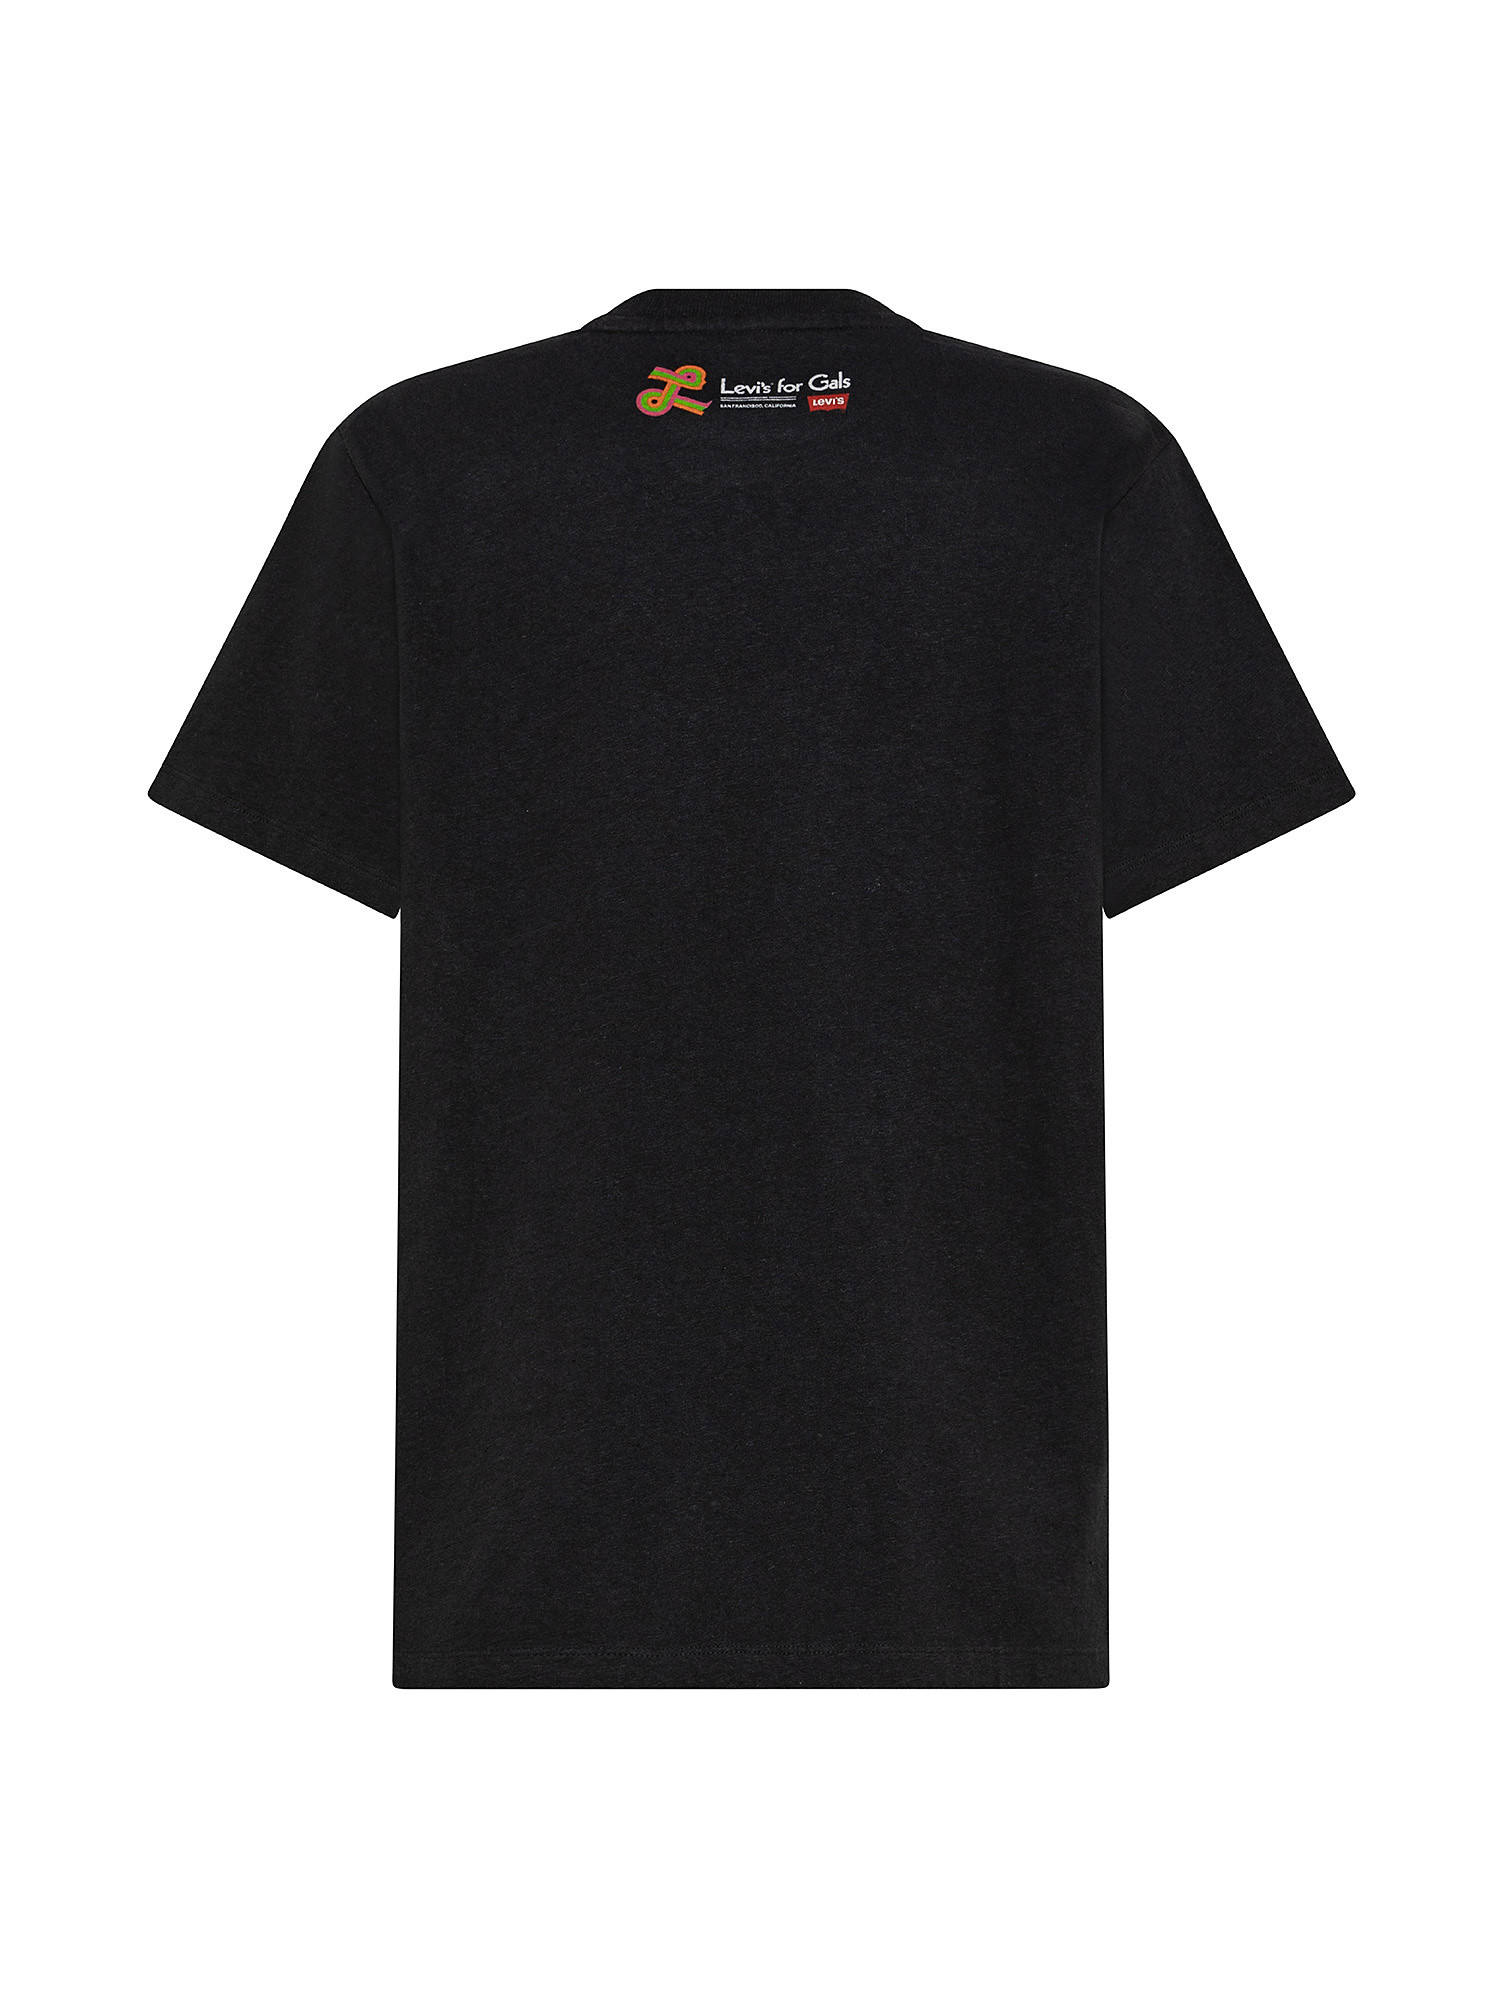 Graphic Jet Tee T-shirt, Black, large image number 1